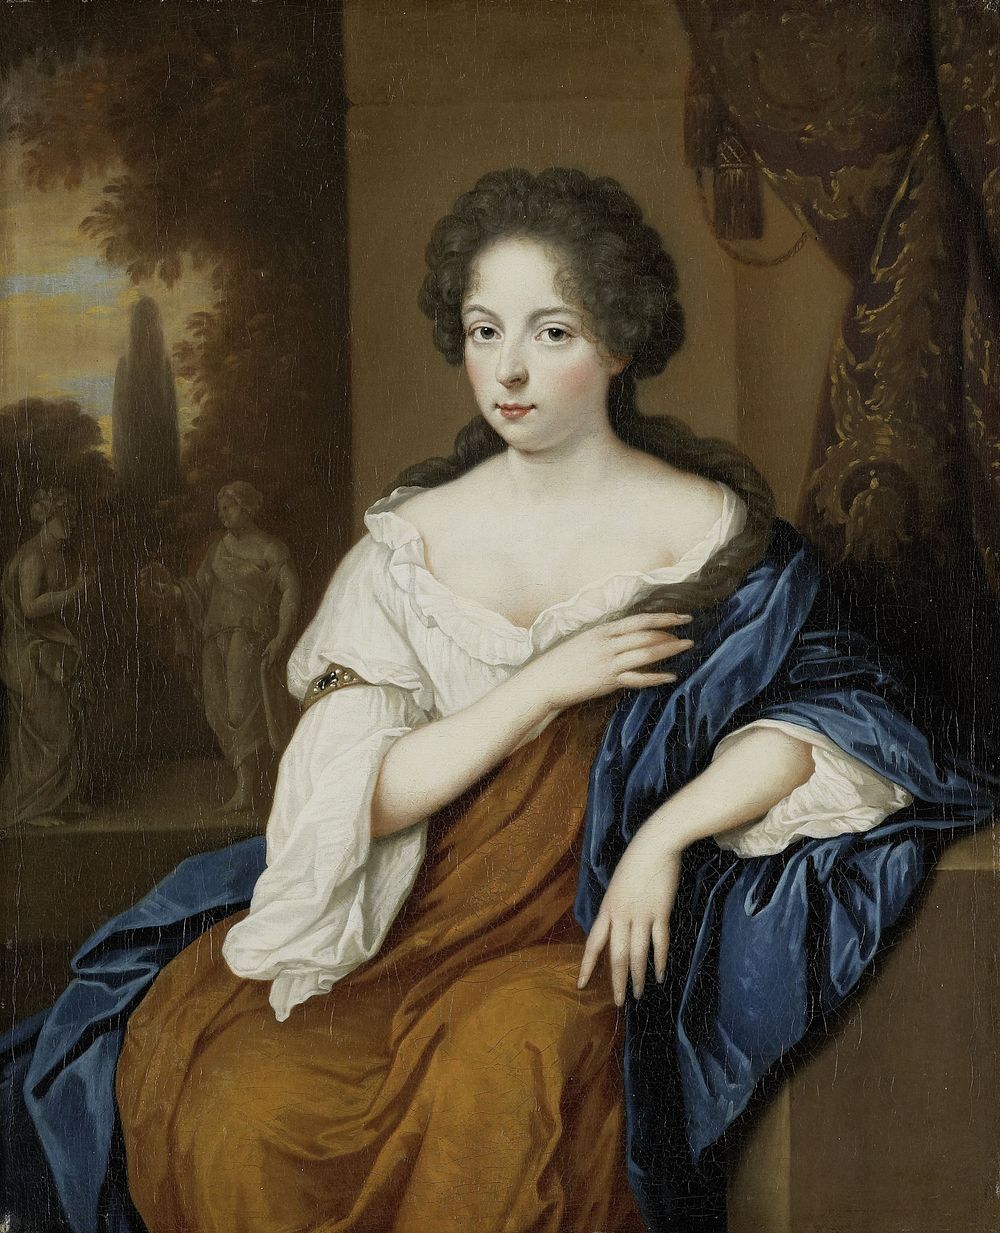 Portrait of a Woman (1670 - 1700) by Jan van Haensbergen